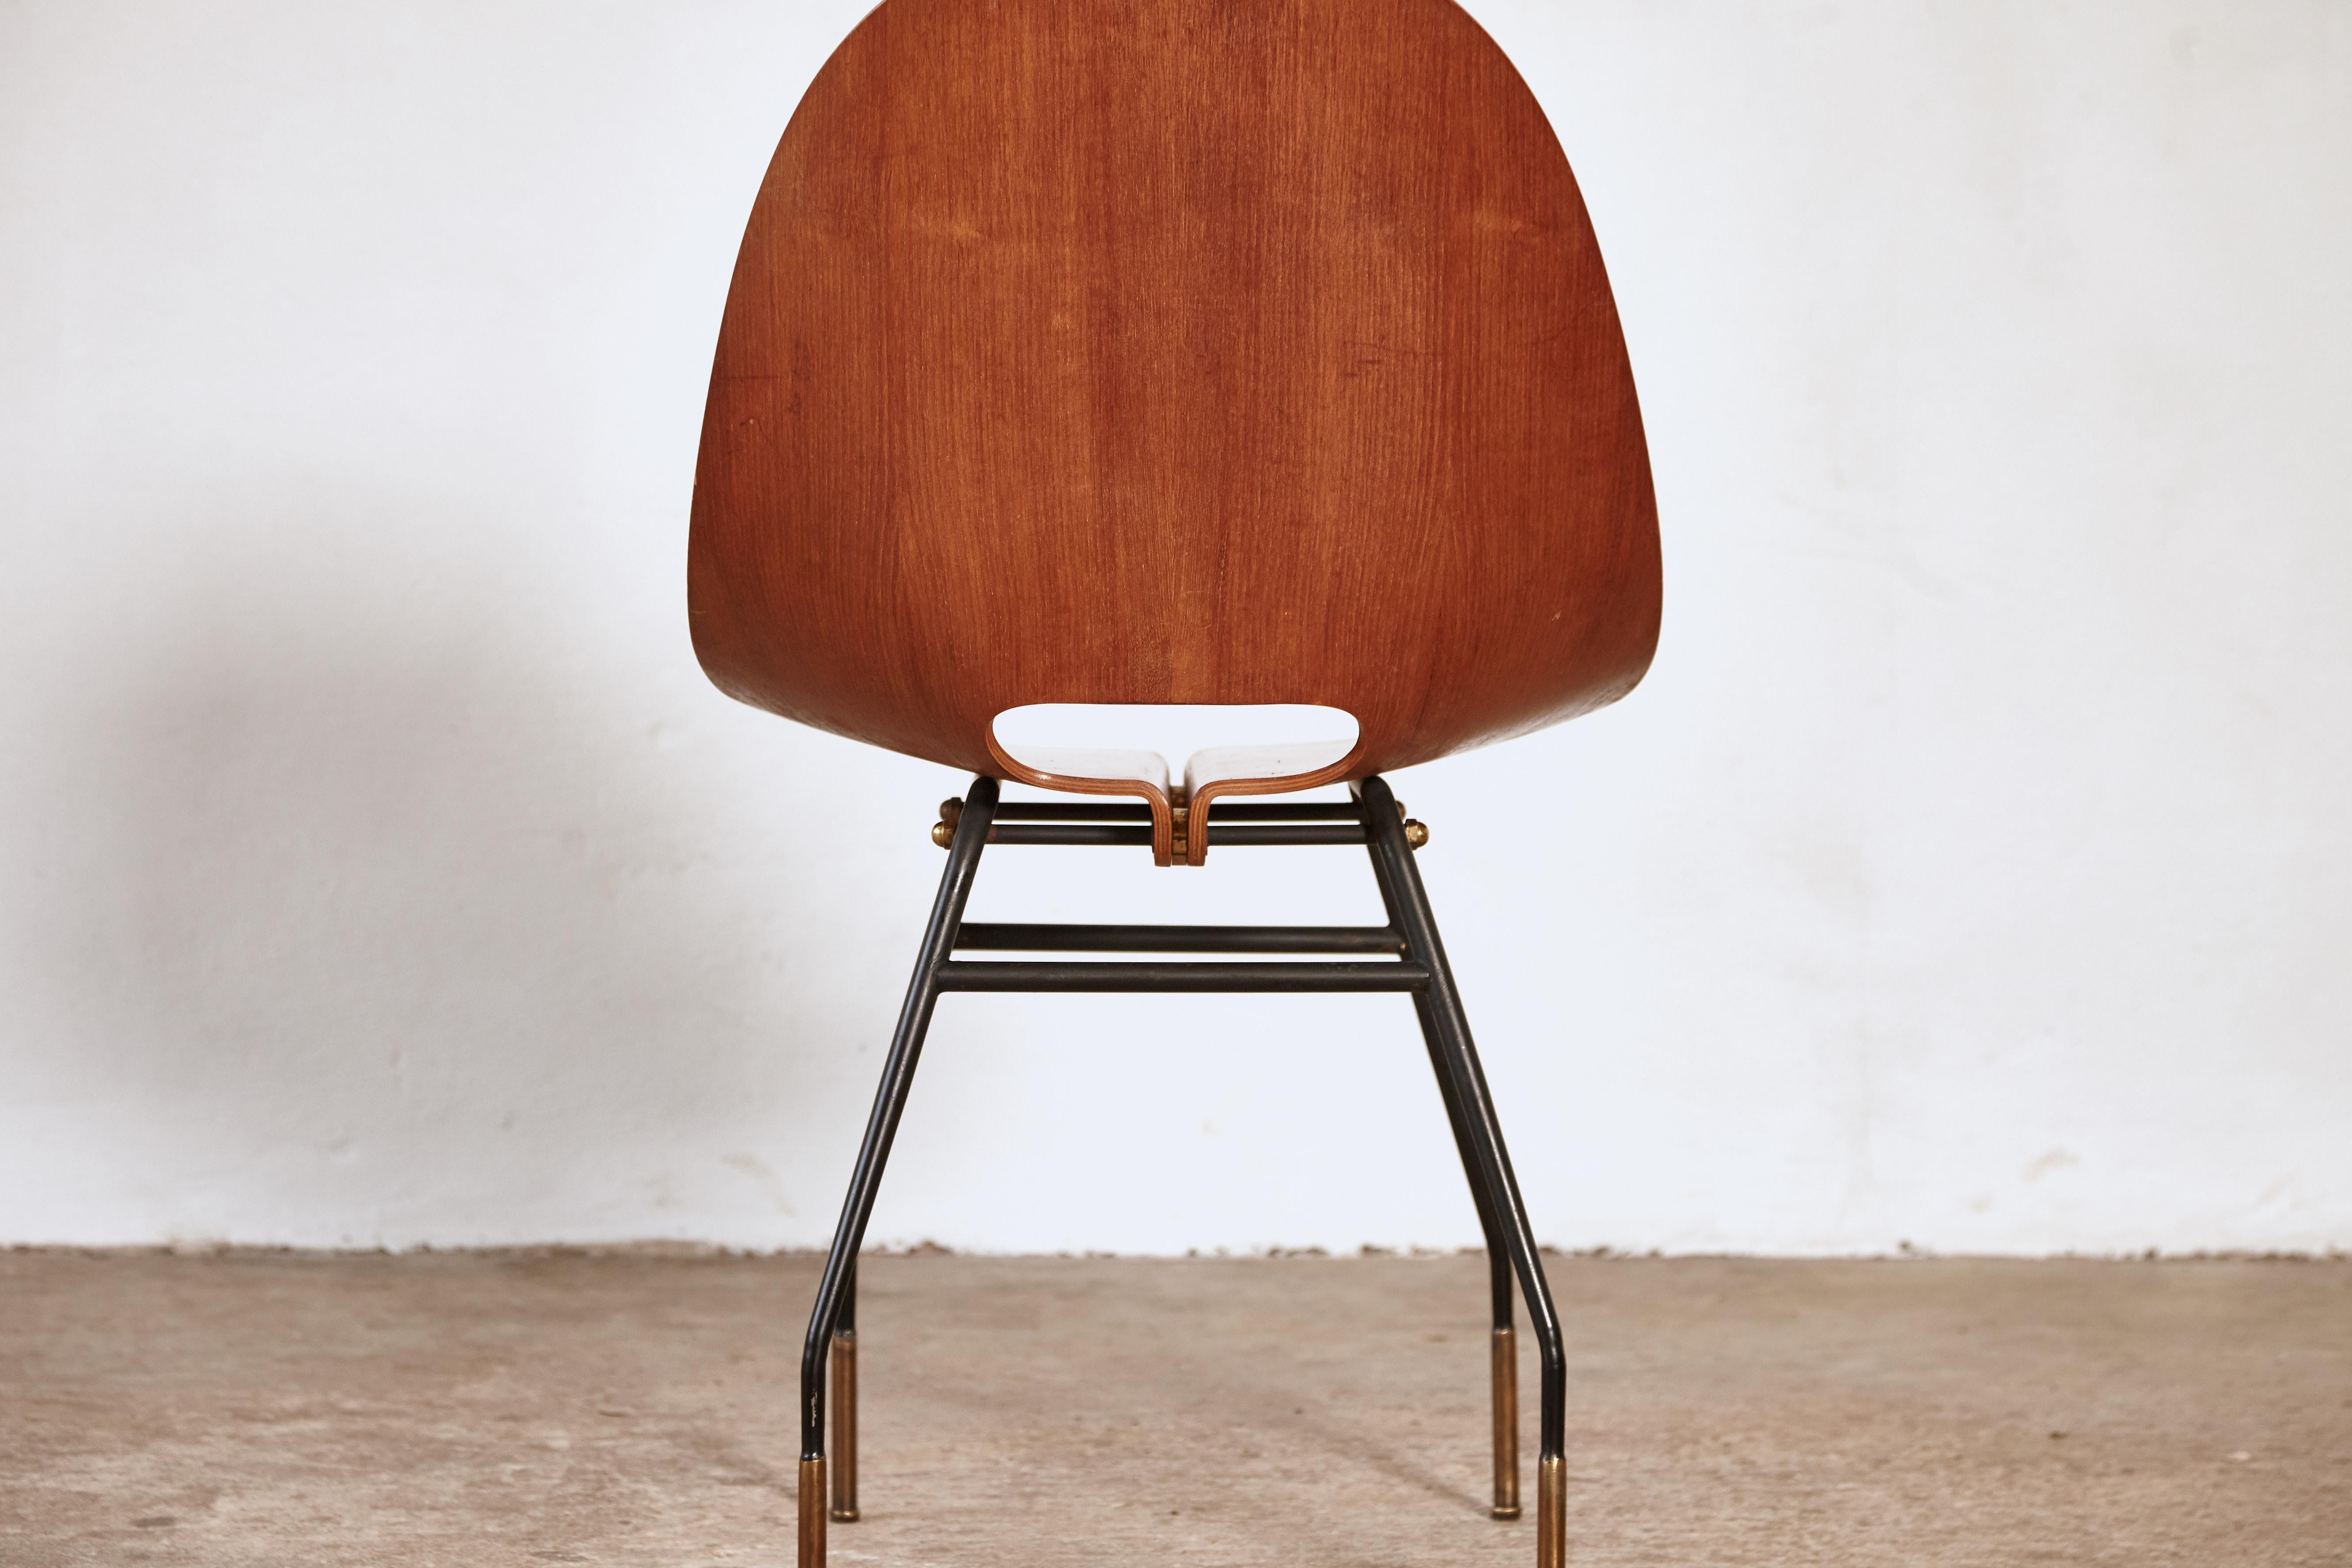 Seltener Societa Compensati Curvati-Stuhl, Italien, 1950er Jahre (20. Jahrhundert) im Angebot